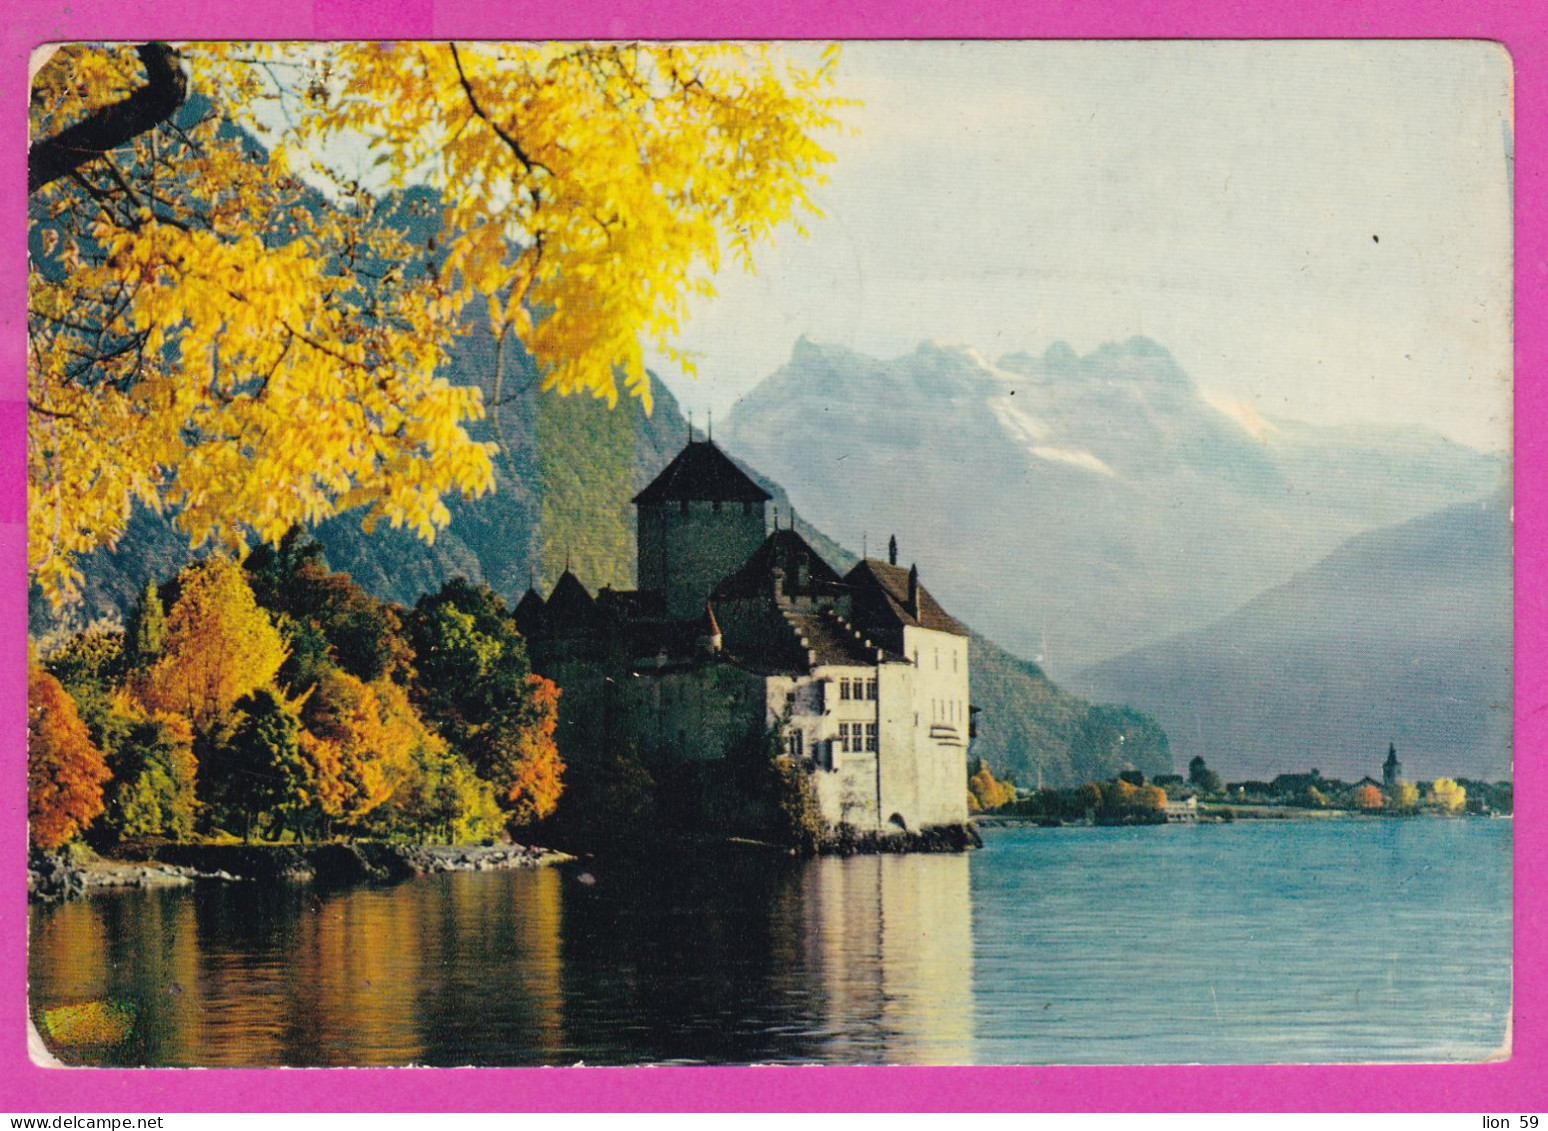 294187 / France - Lac Leman Chateau De Chillon PC 1972 USED 0.30 Fr. Marianne De Cheffer Flamme THONON LES BAINS / STATI - 1967-1970 Marianne Of Cheffer